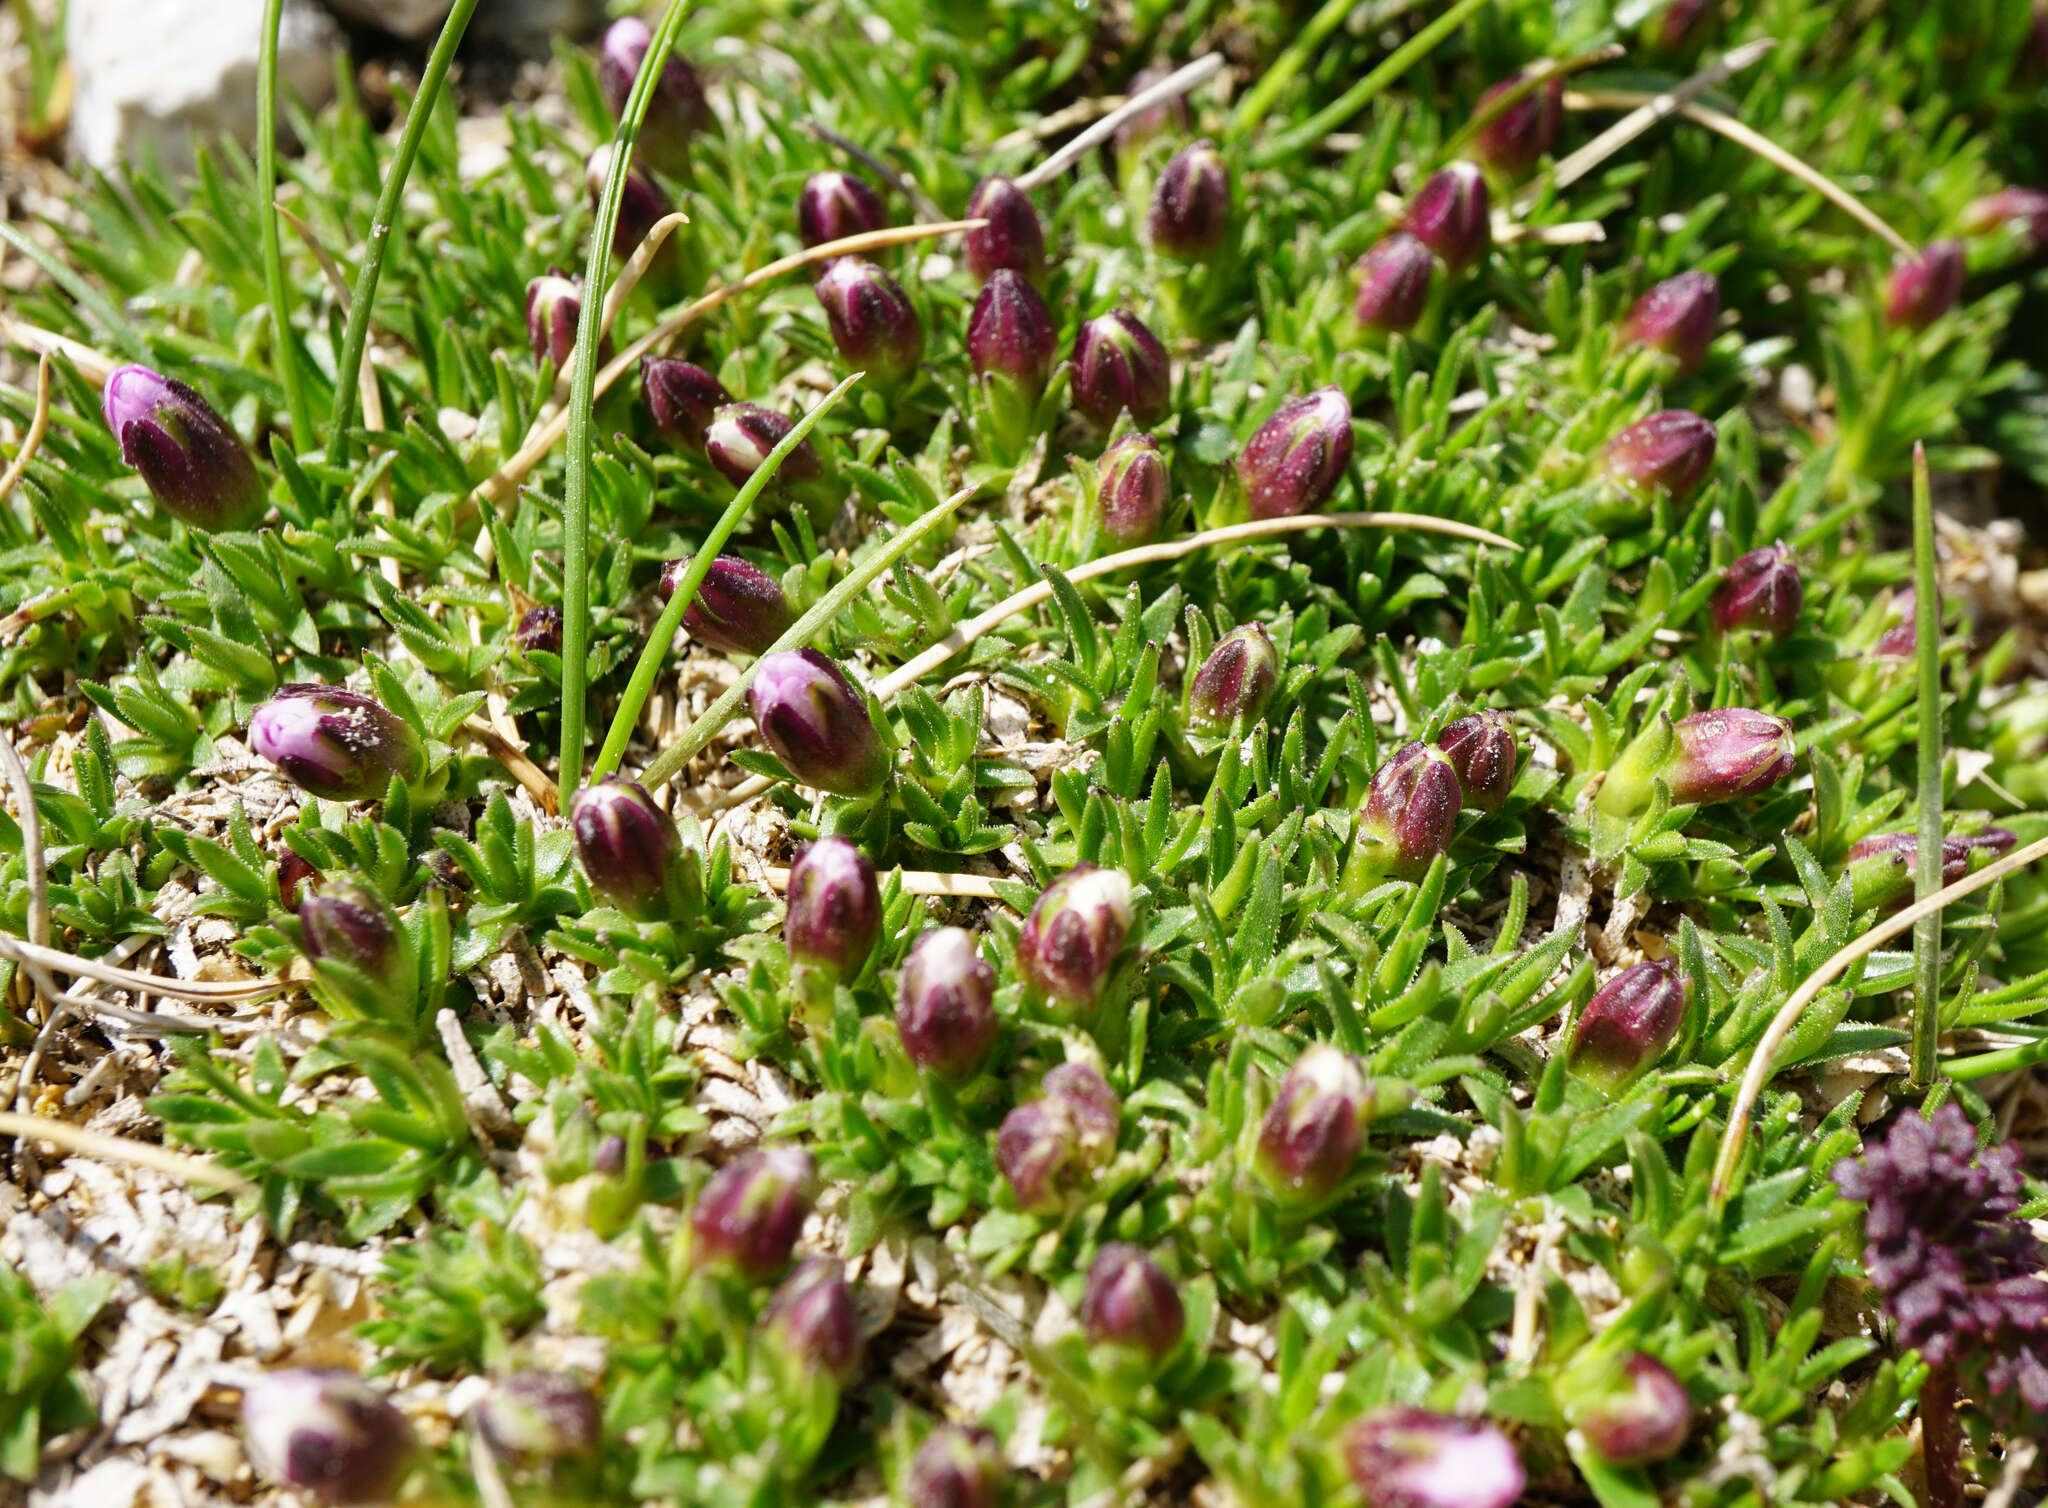 Image of Silene acaulis subsp. longiscapa Vierh.